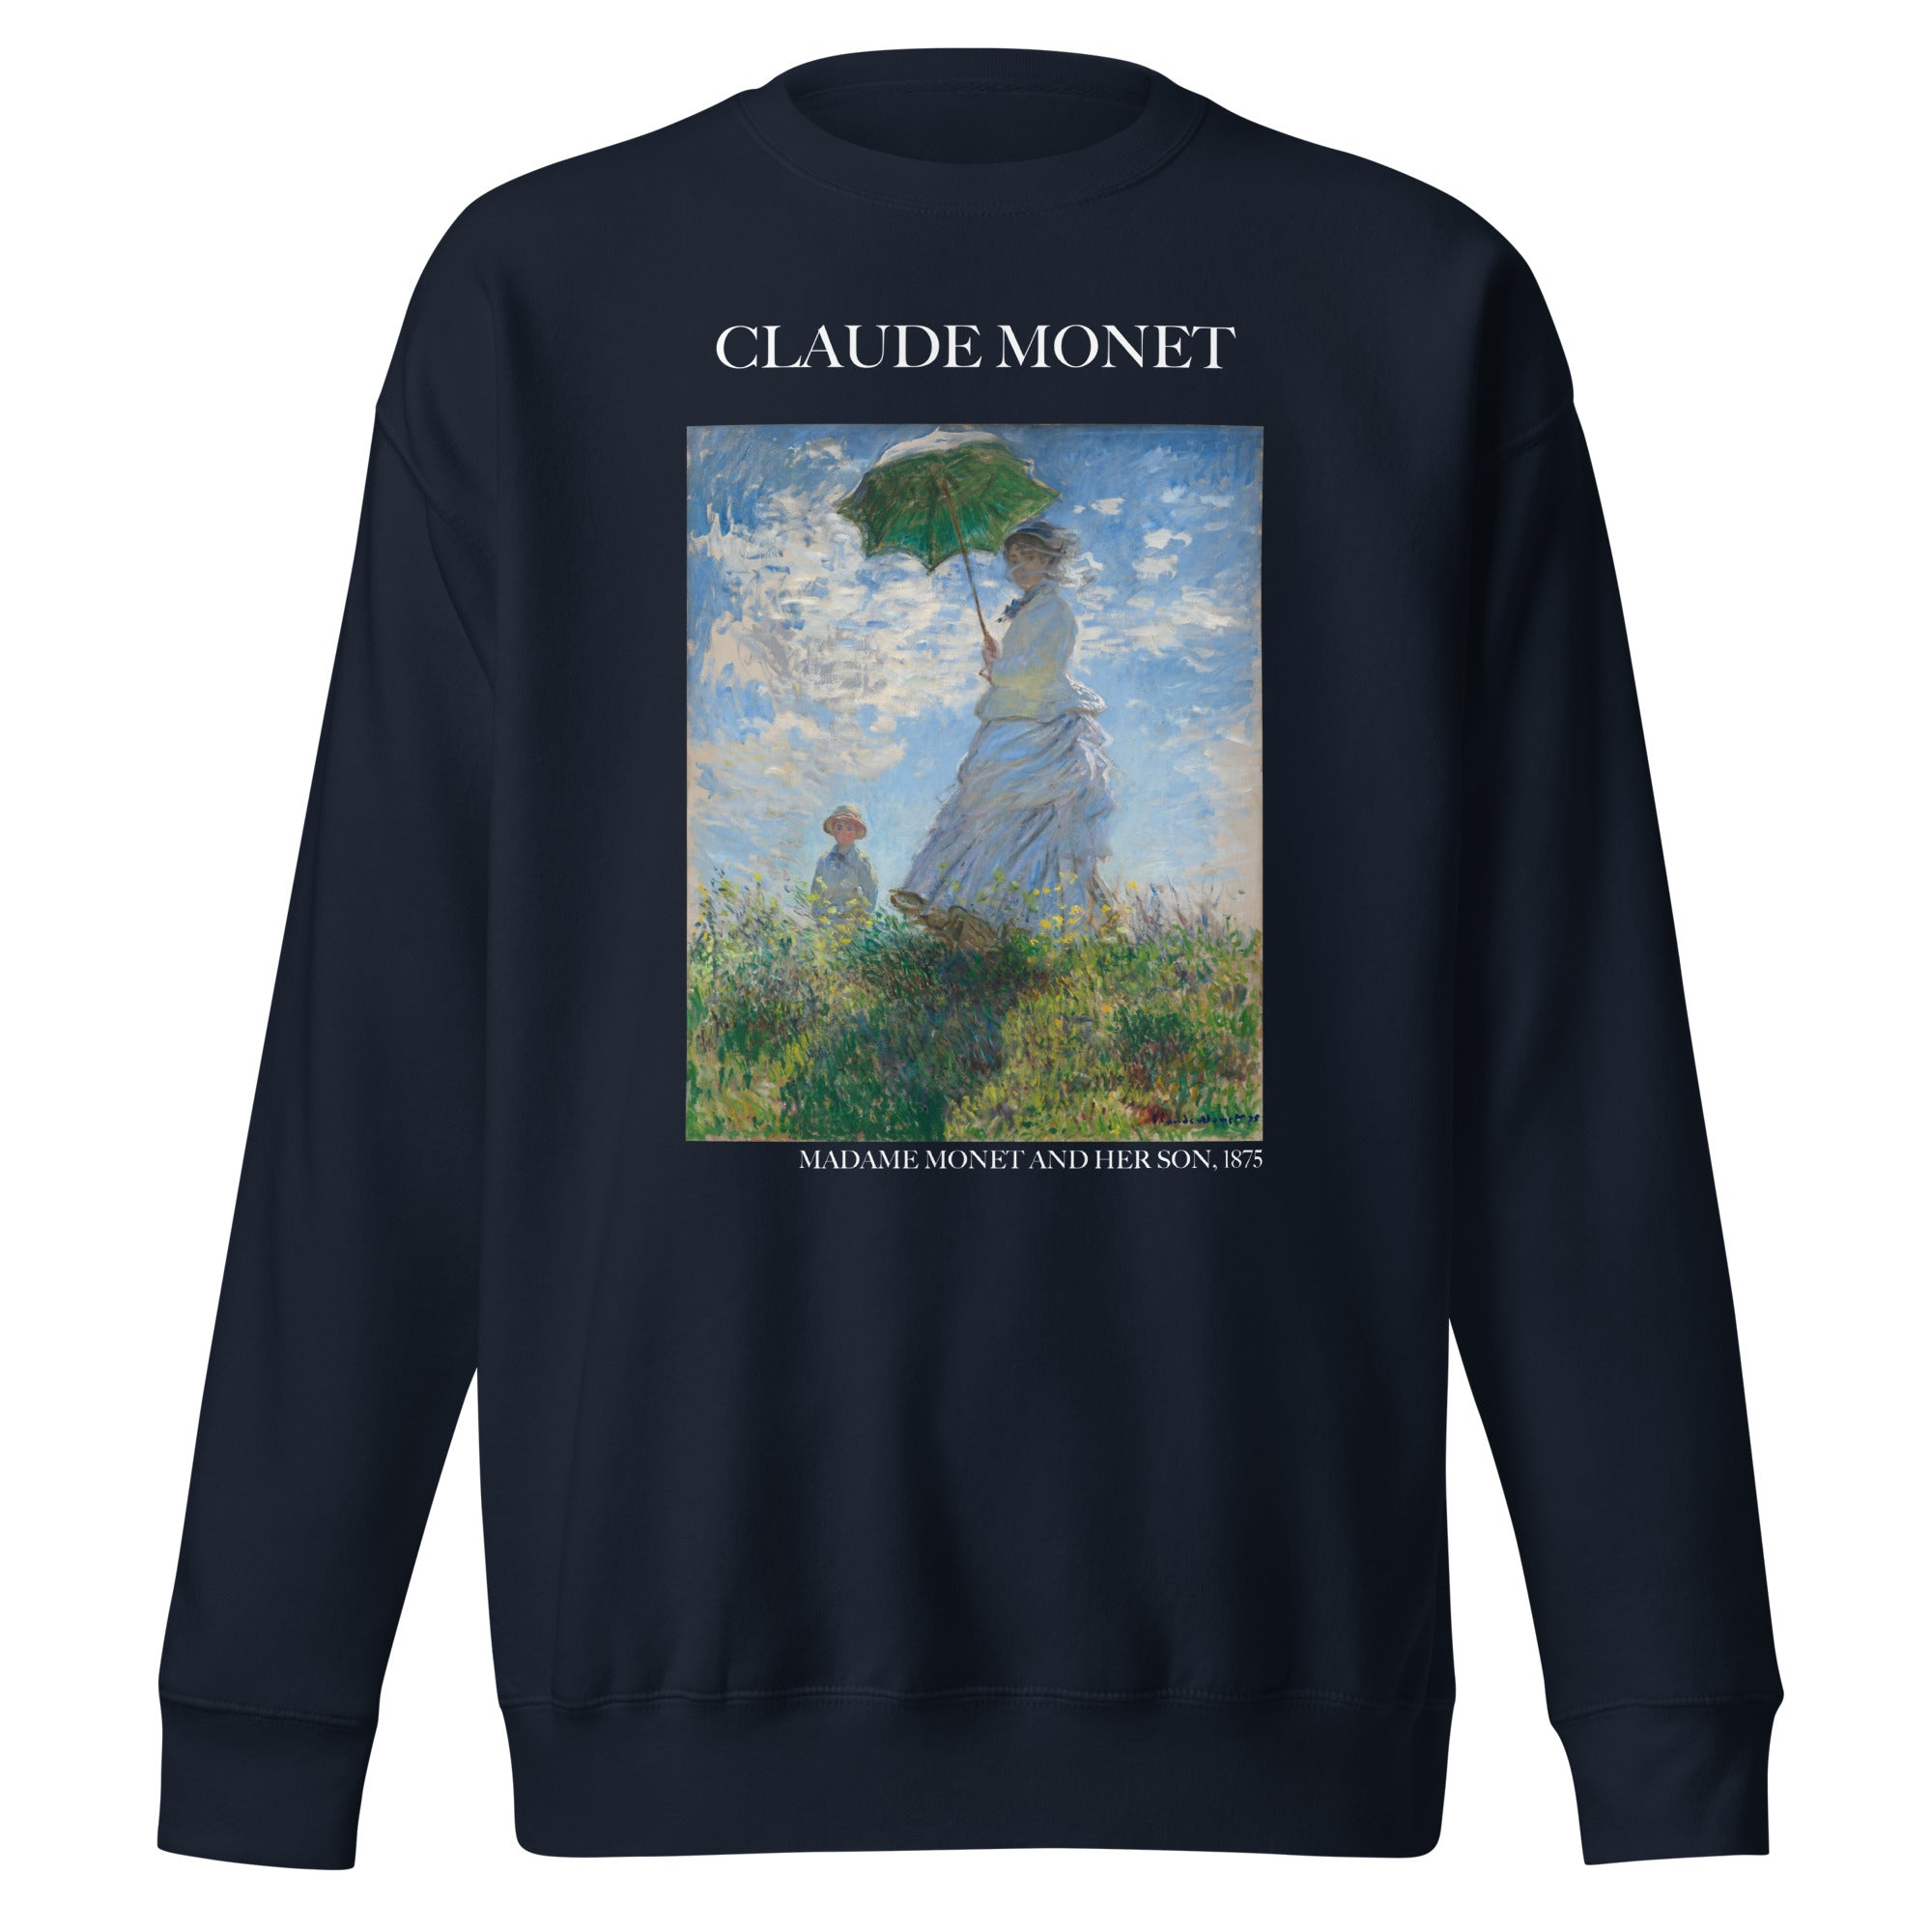 Claude Monet 'Madame Monet and Her Son' Famous Painting Sweatshirt | Unisex Premium Sweatshirt